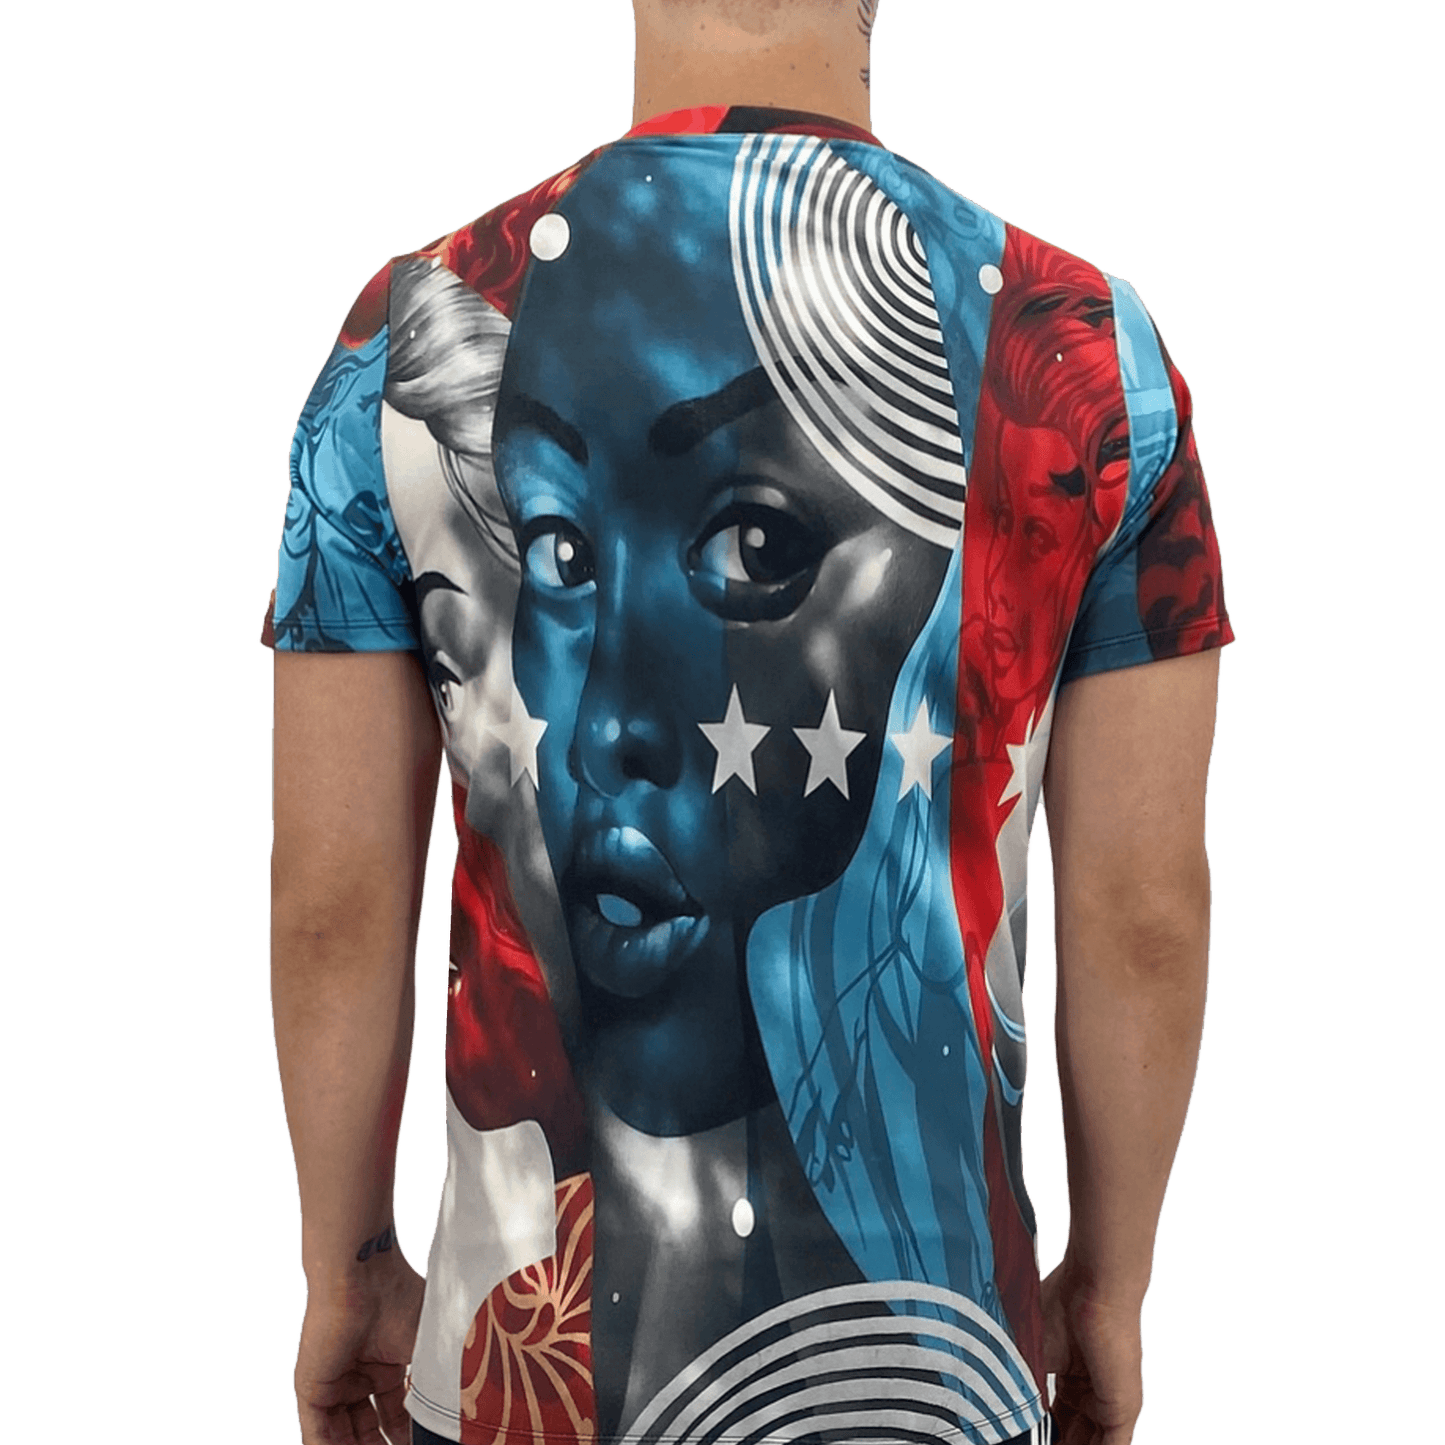 Starred Men's T-Shirt - USA Made Dropship